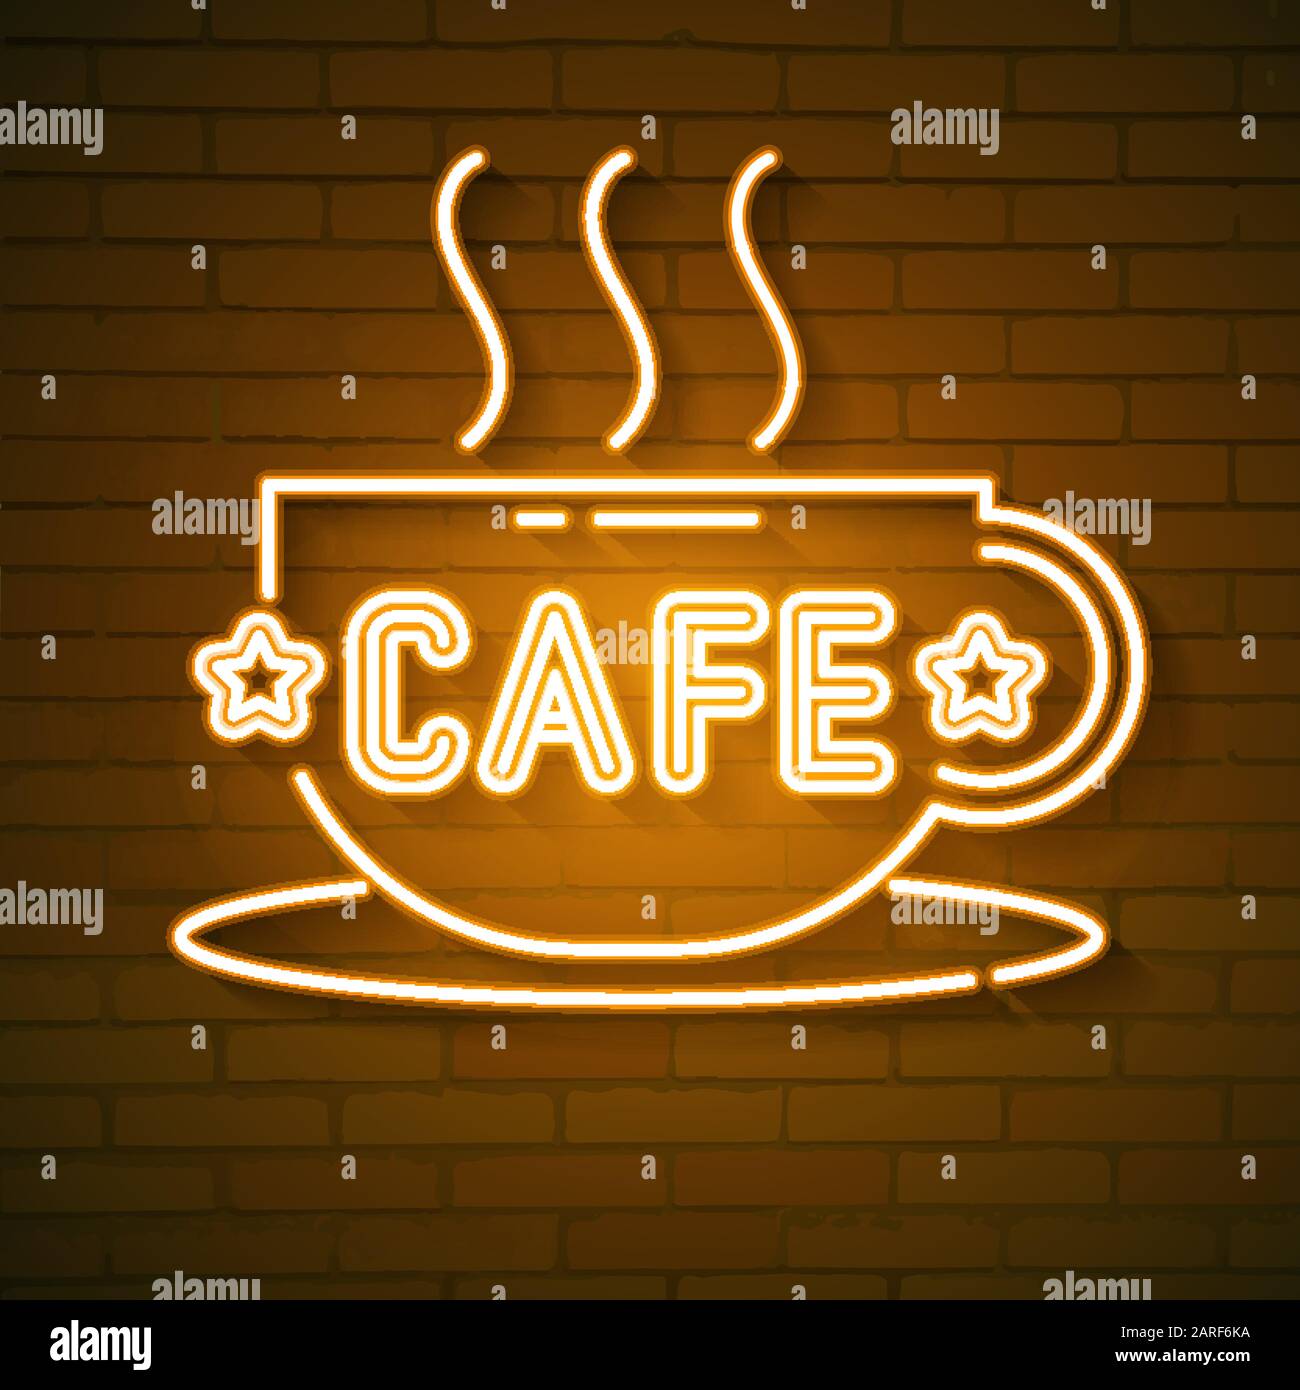 16"x12" i497-b Bakery Coffee Shop Cup Display Neon Sign 